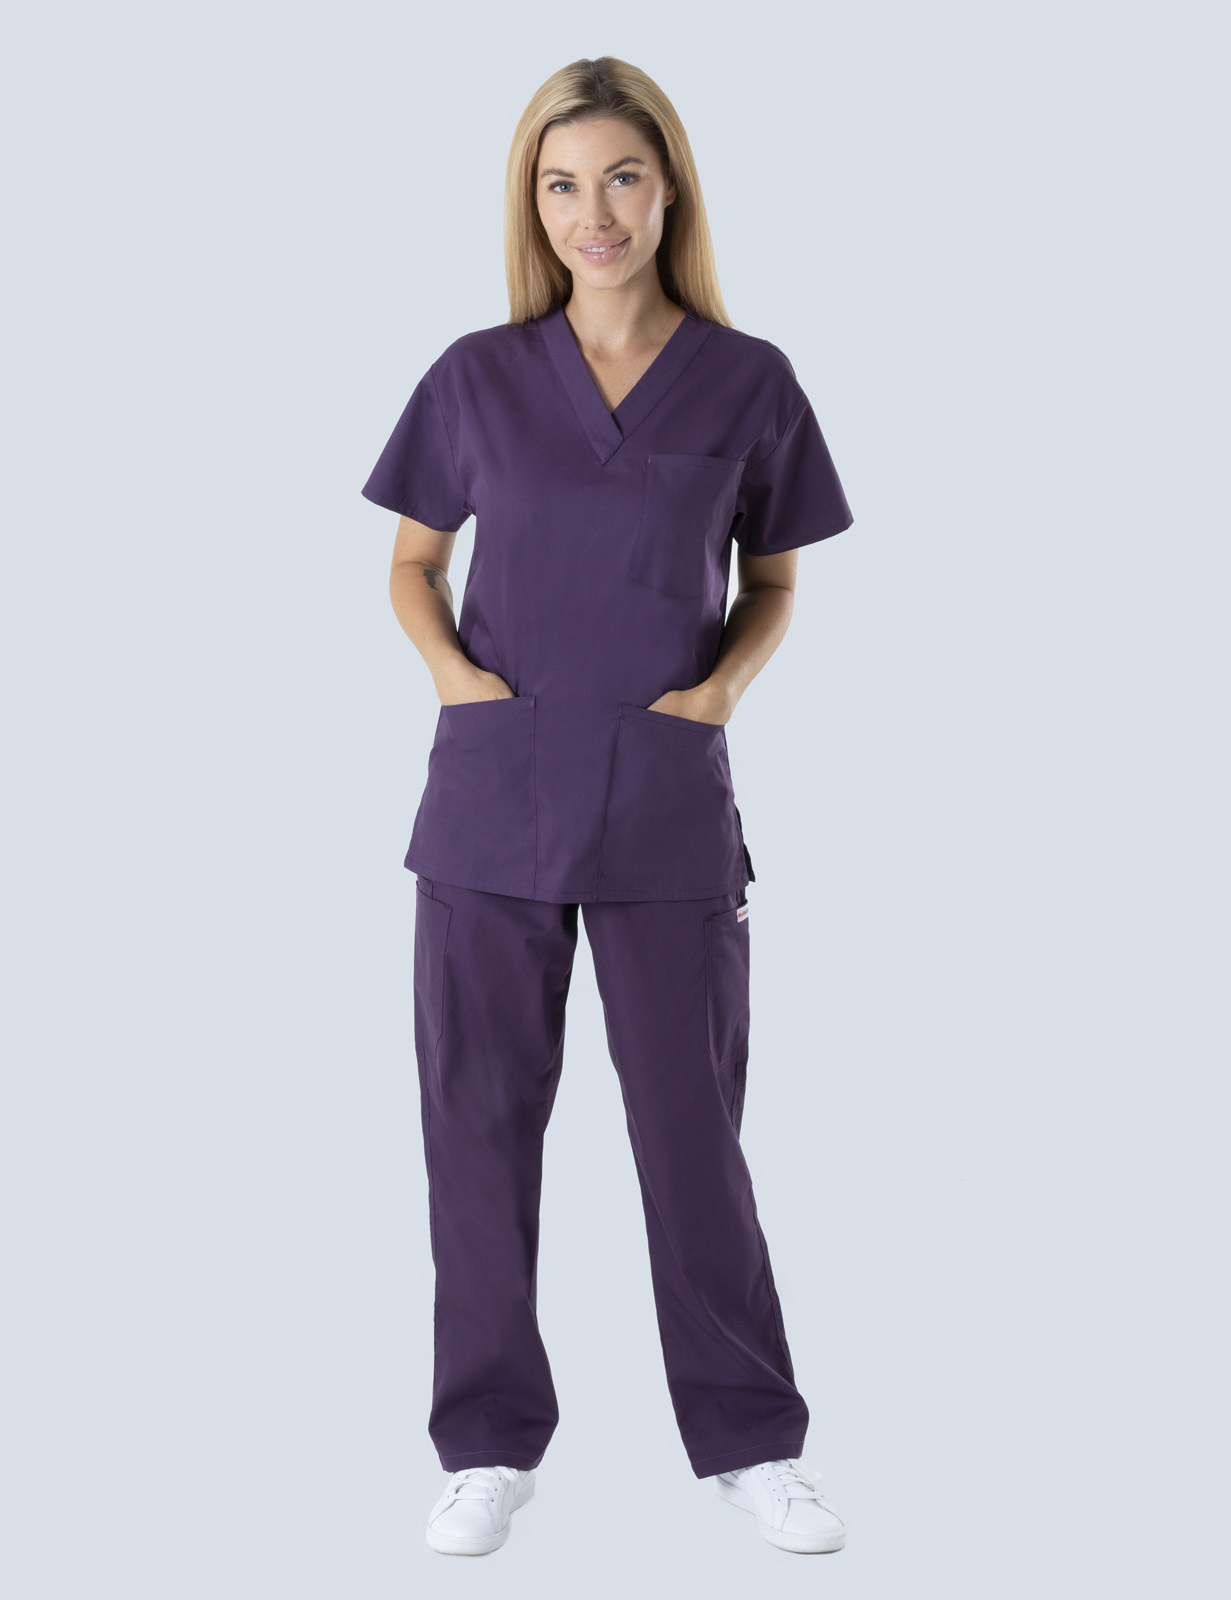 Logan Hospital Special Care Nursery Uniform Set Bundle (4 Pocket Top and cargo Pants in Aubergine incl Logo)